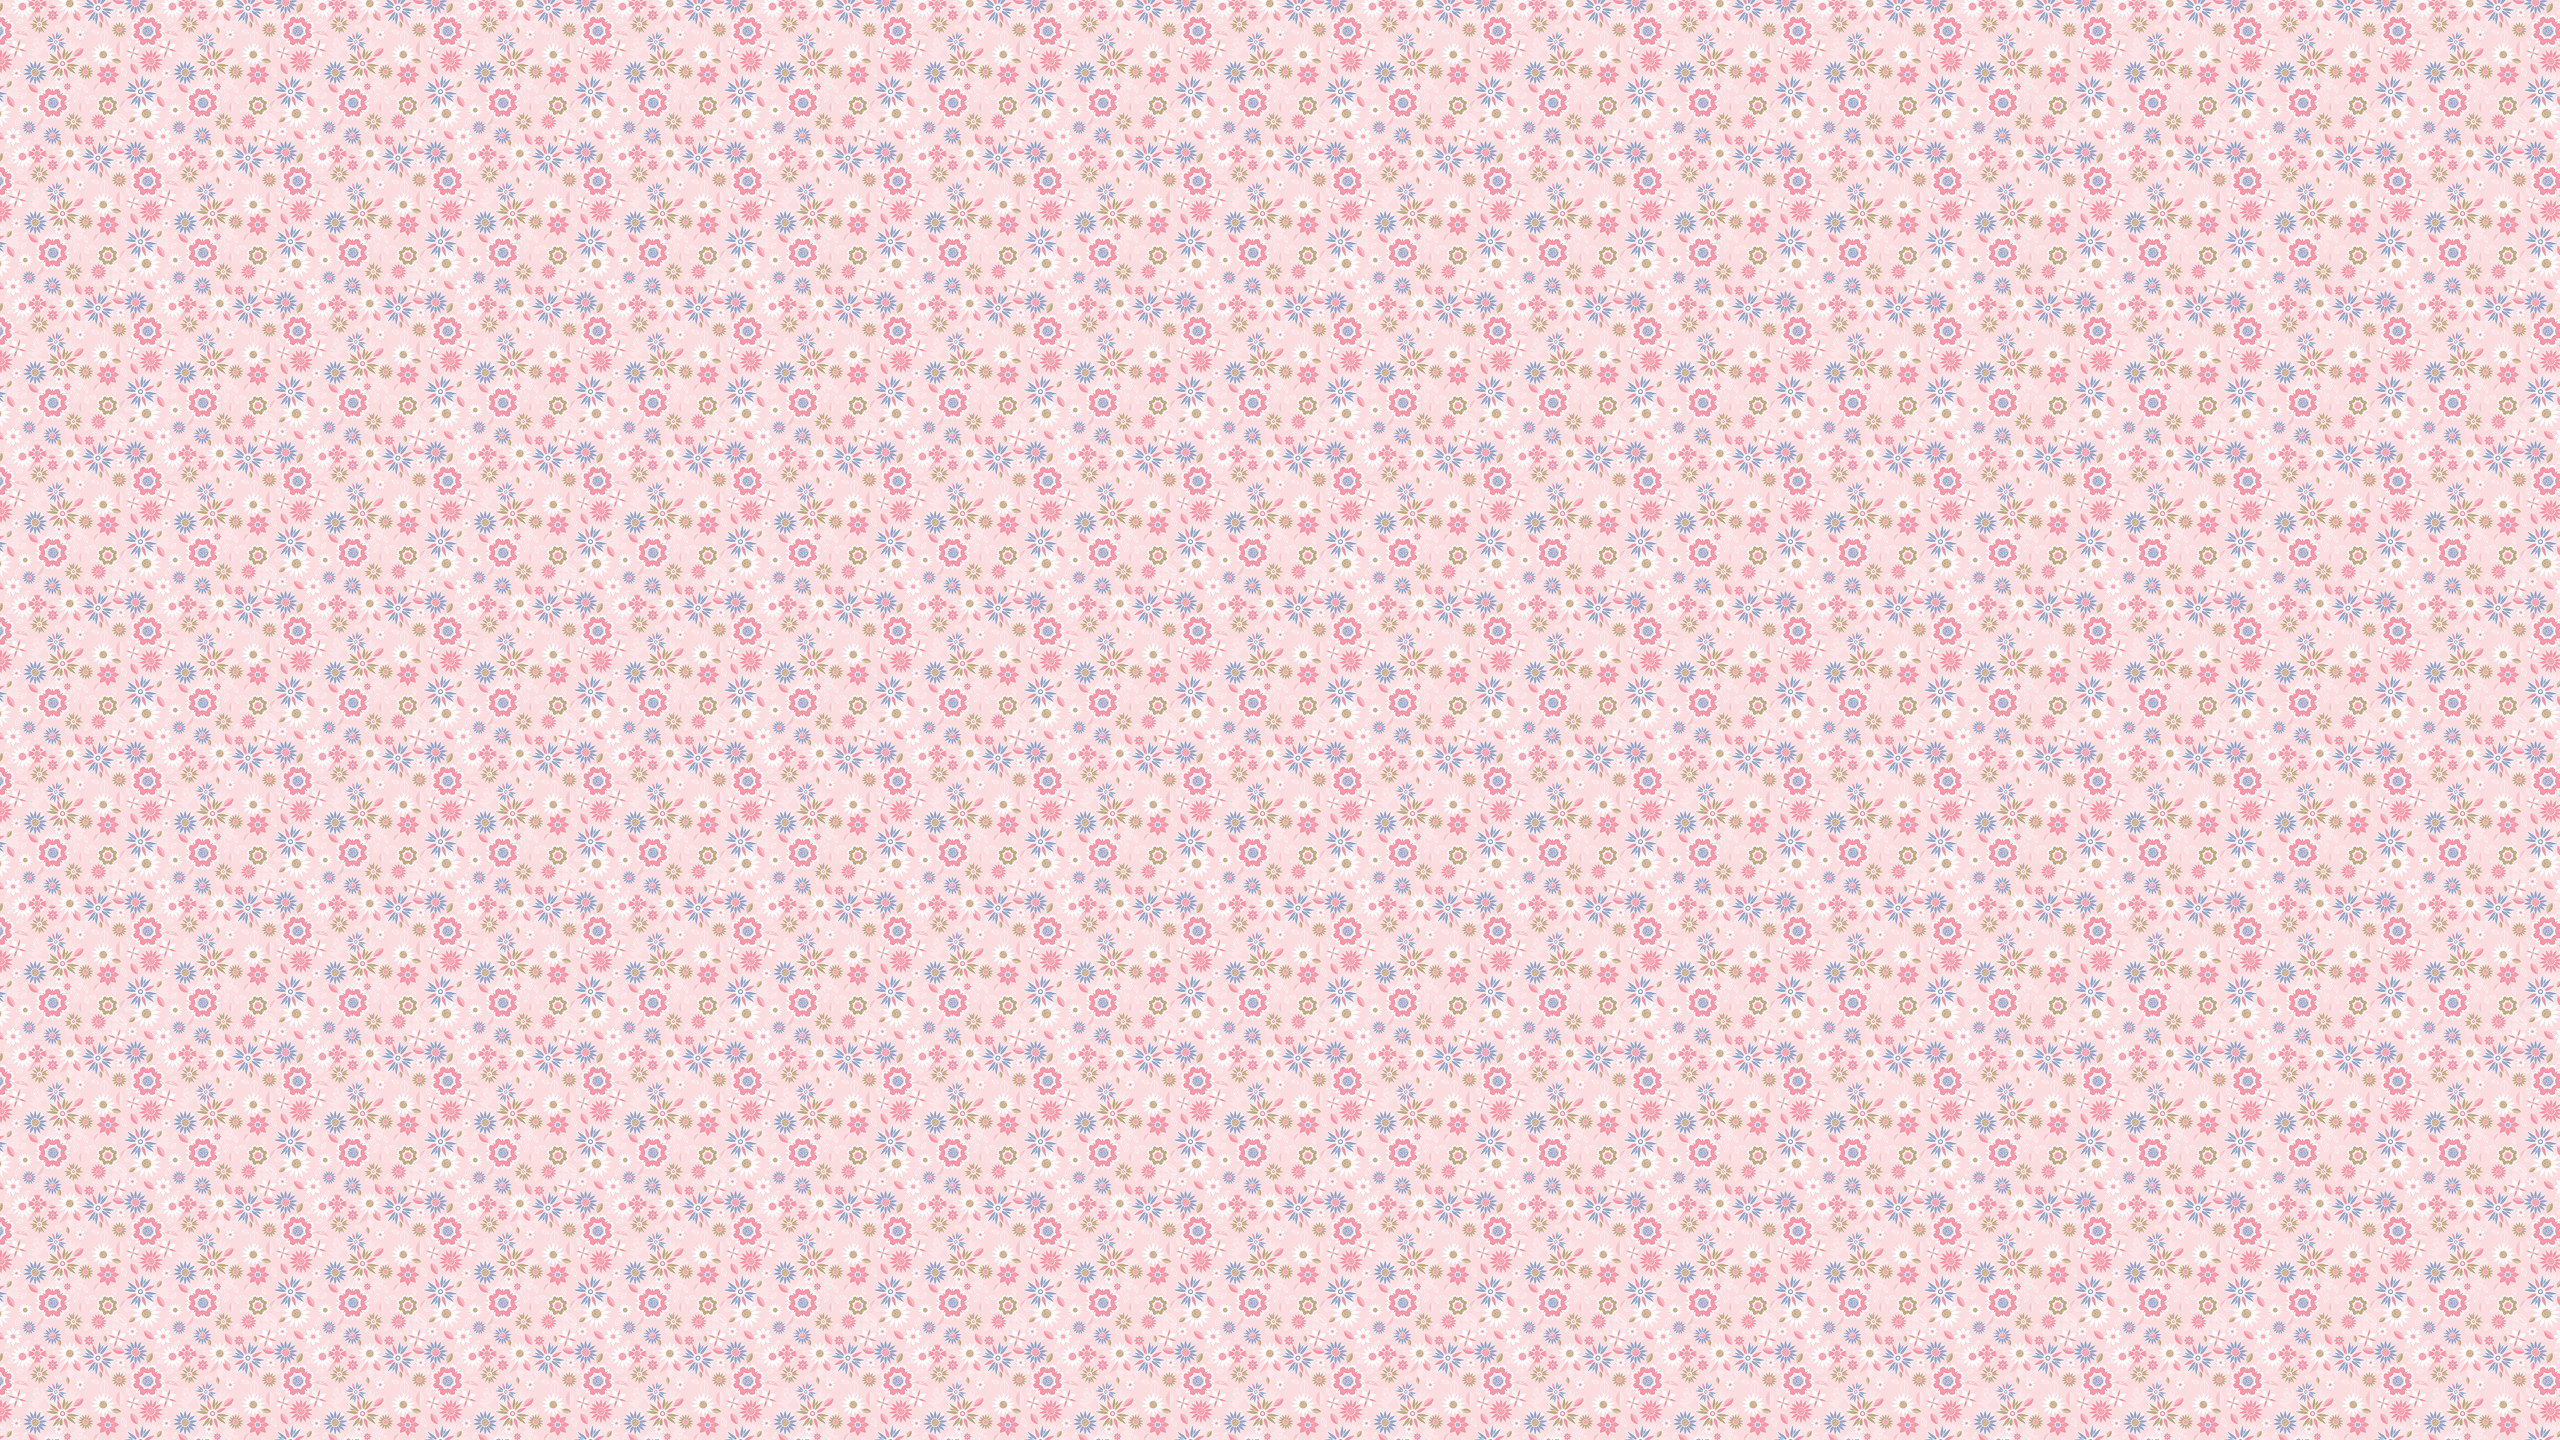 Pink floral background pattern tumblr